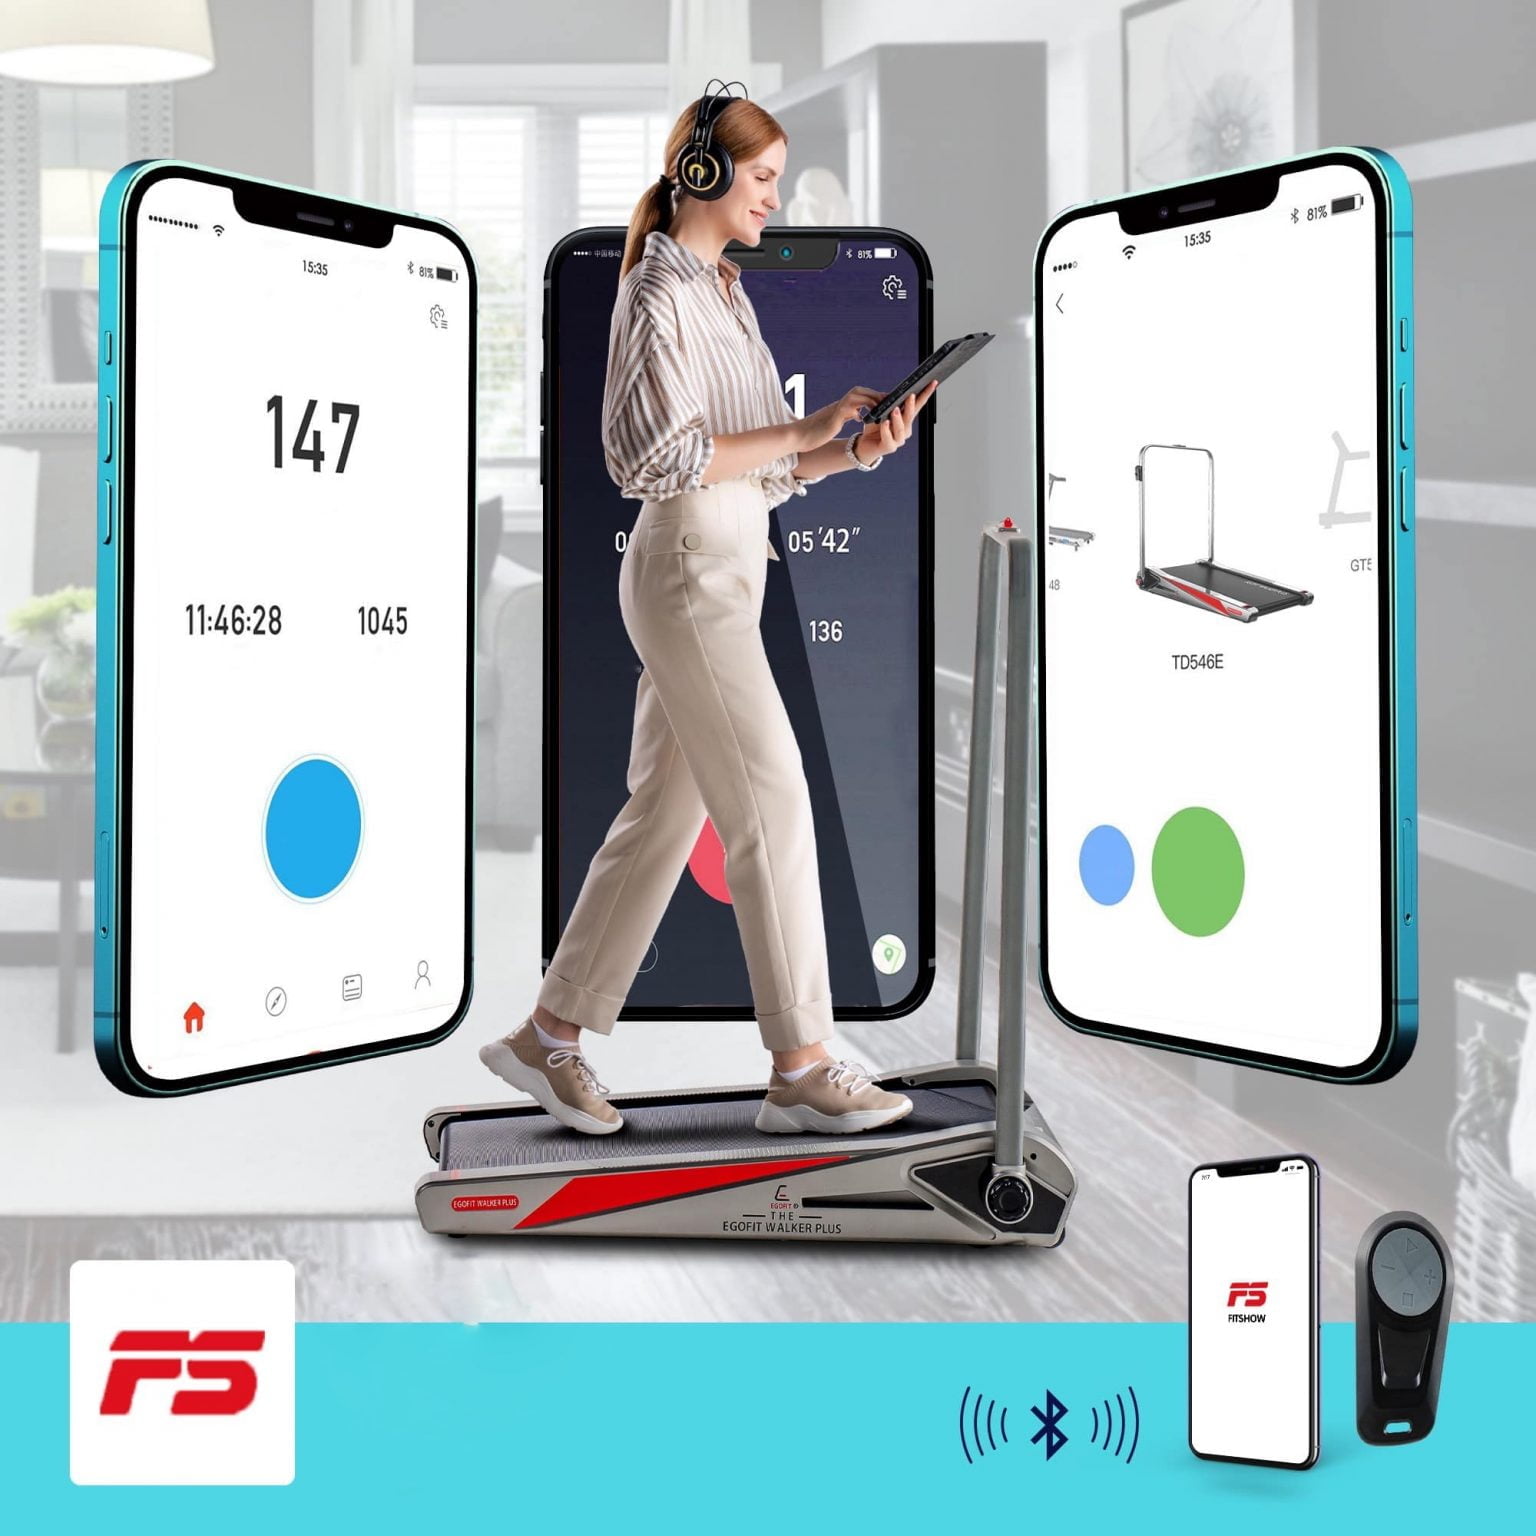 treadmill mobile app